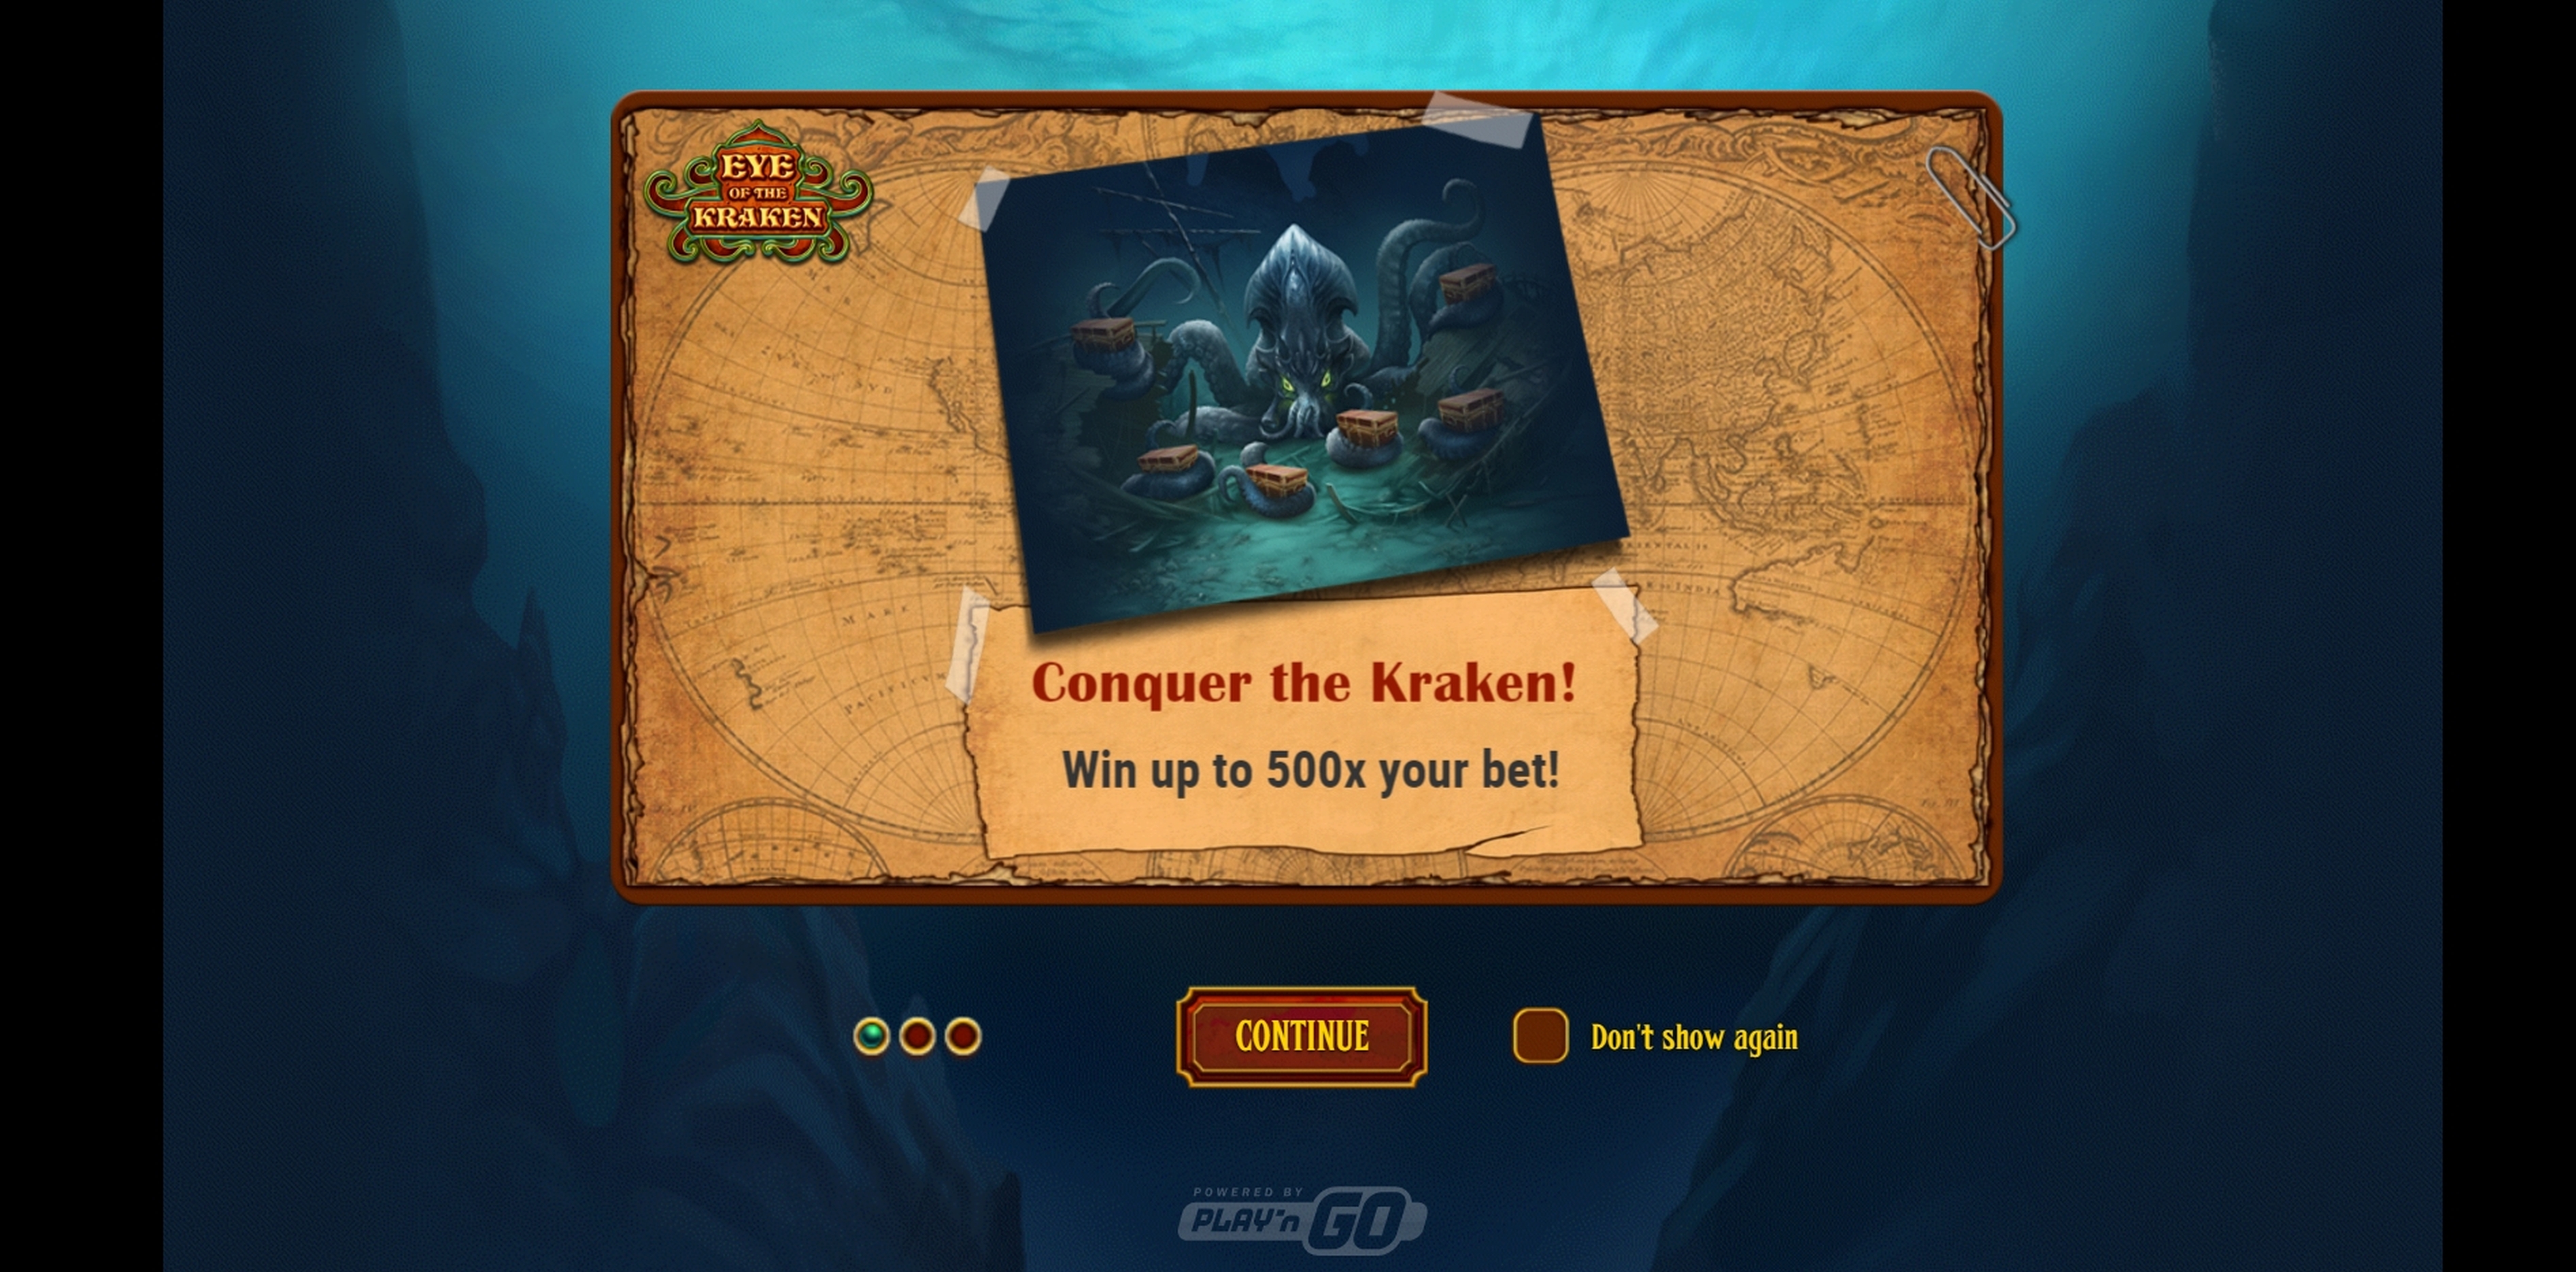 Play Eye of the Kraken Free Casino Slot Game by Playn GO